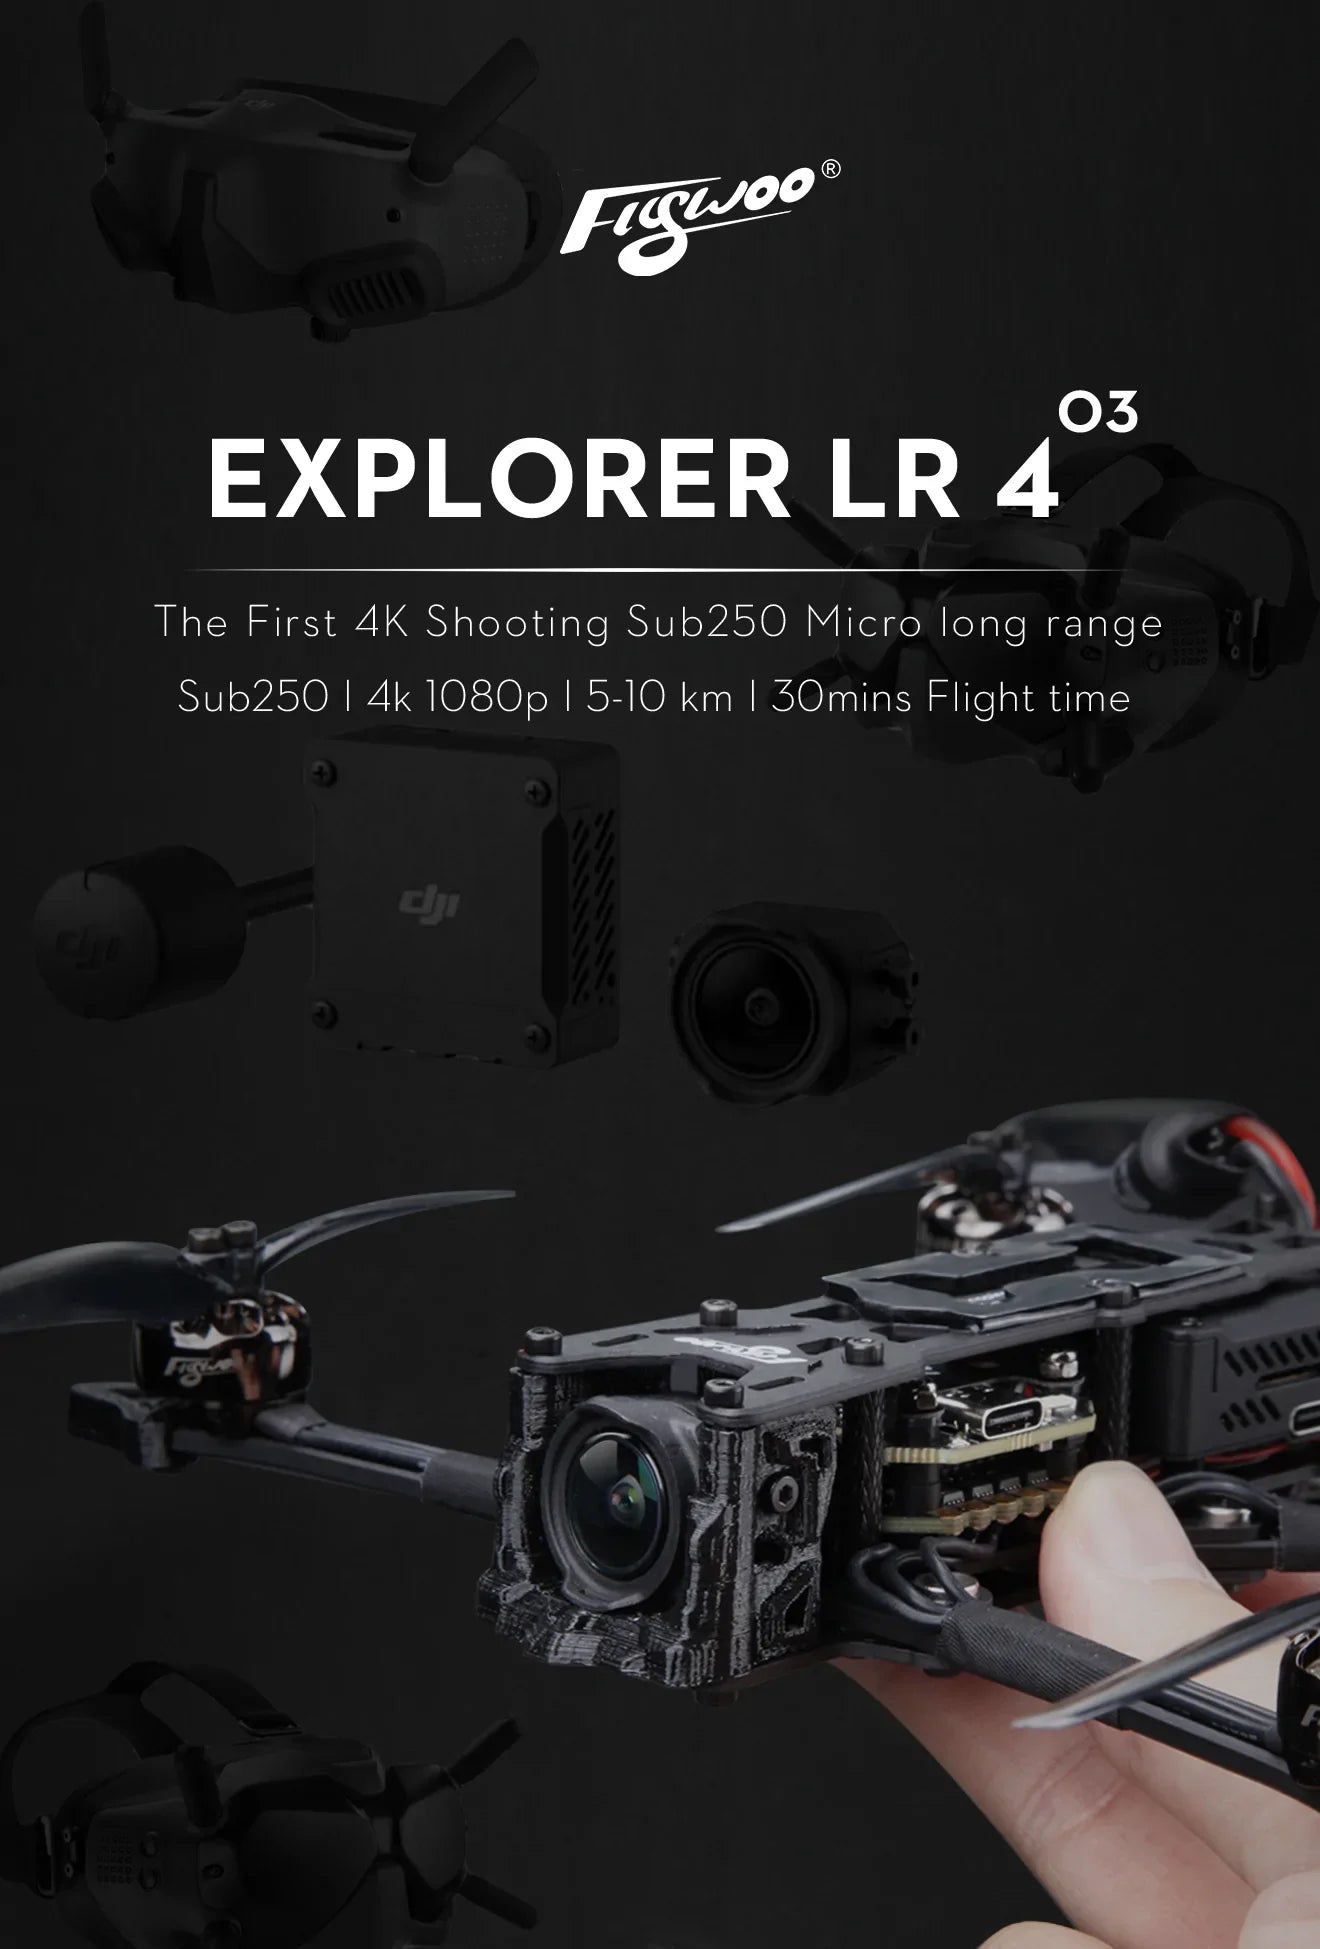 EXPLORER LR 4 The First 4K Shooting Sub250 Micro long range